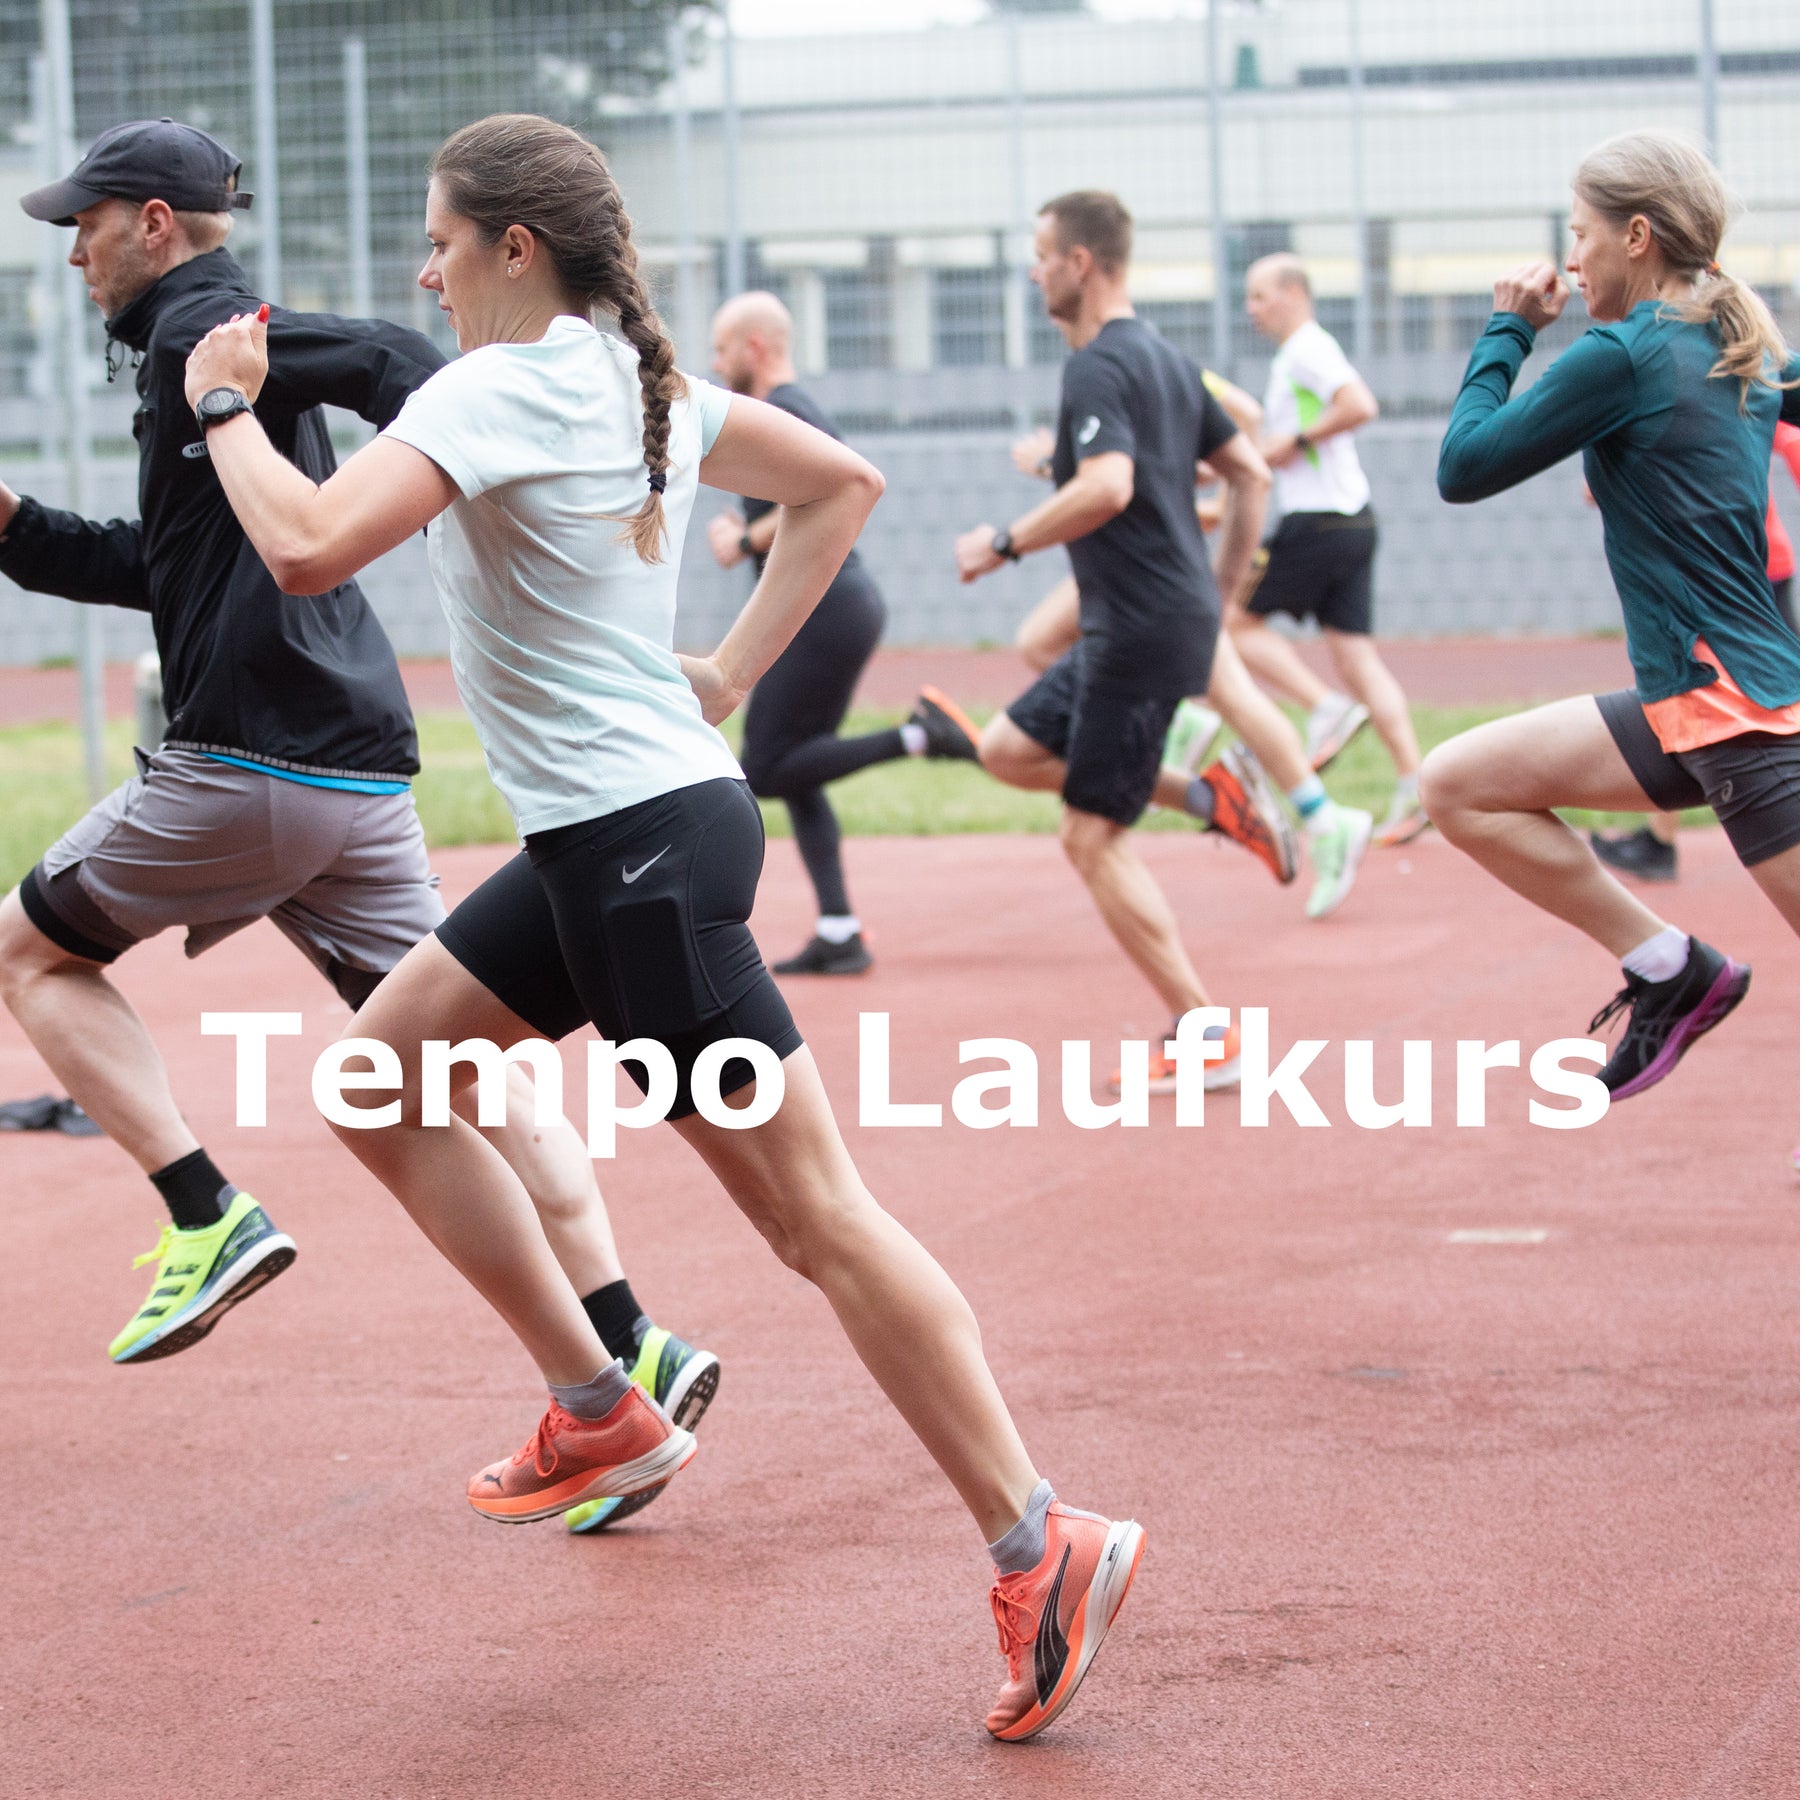 Tempo-Kurs – Tempotraining Laufkurs für alle in Bonn